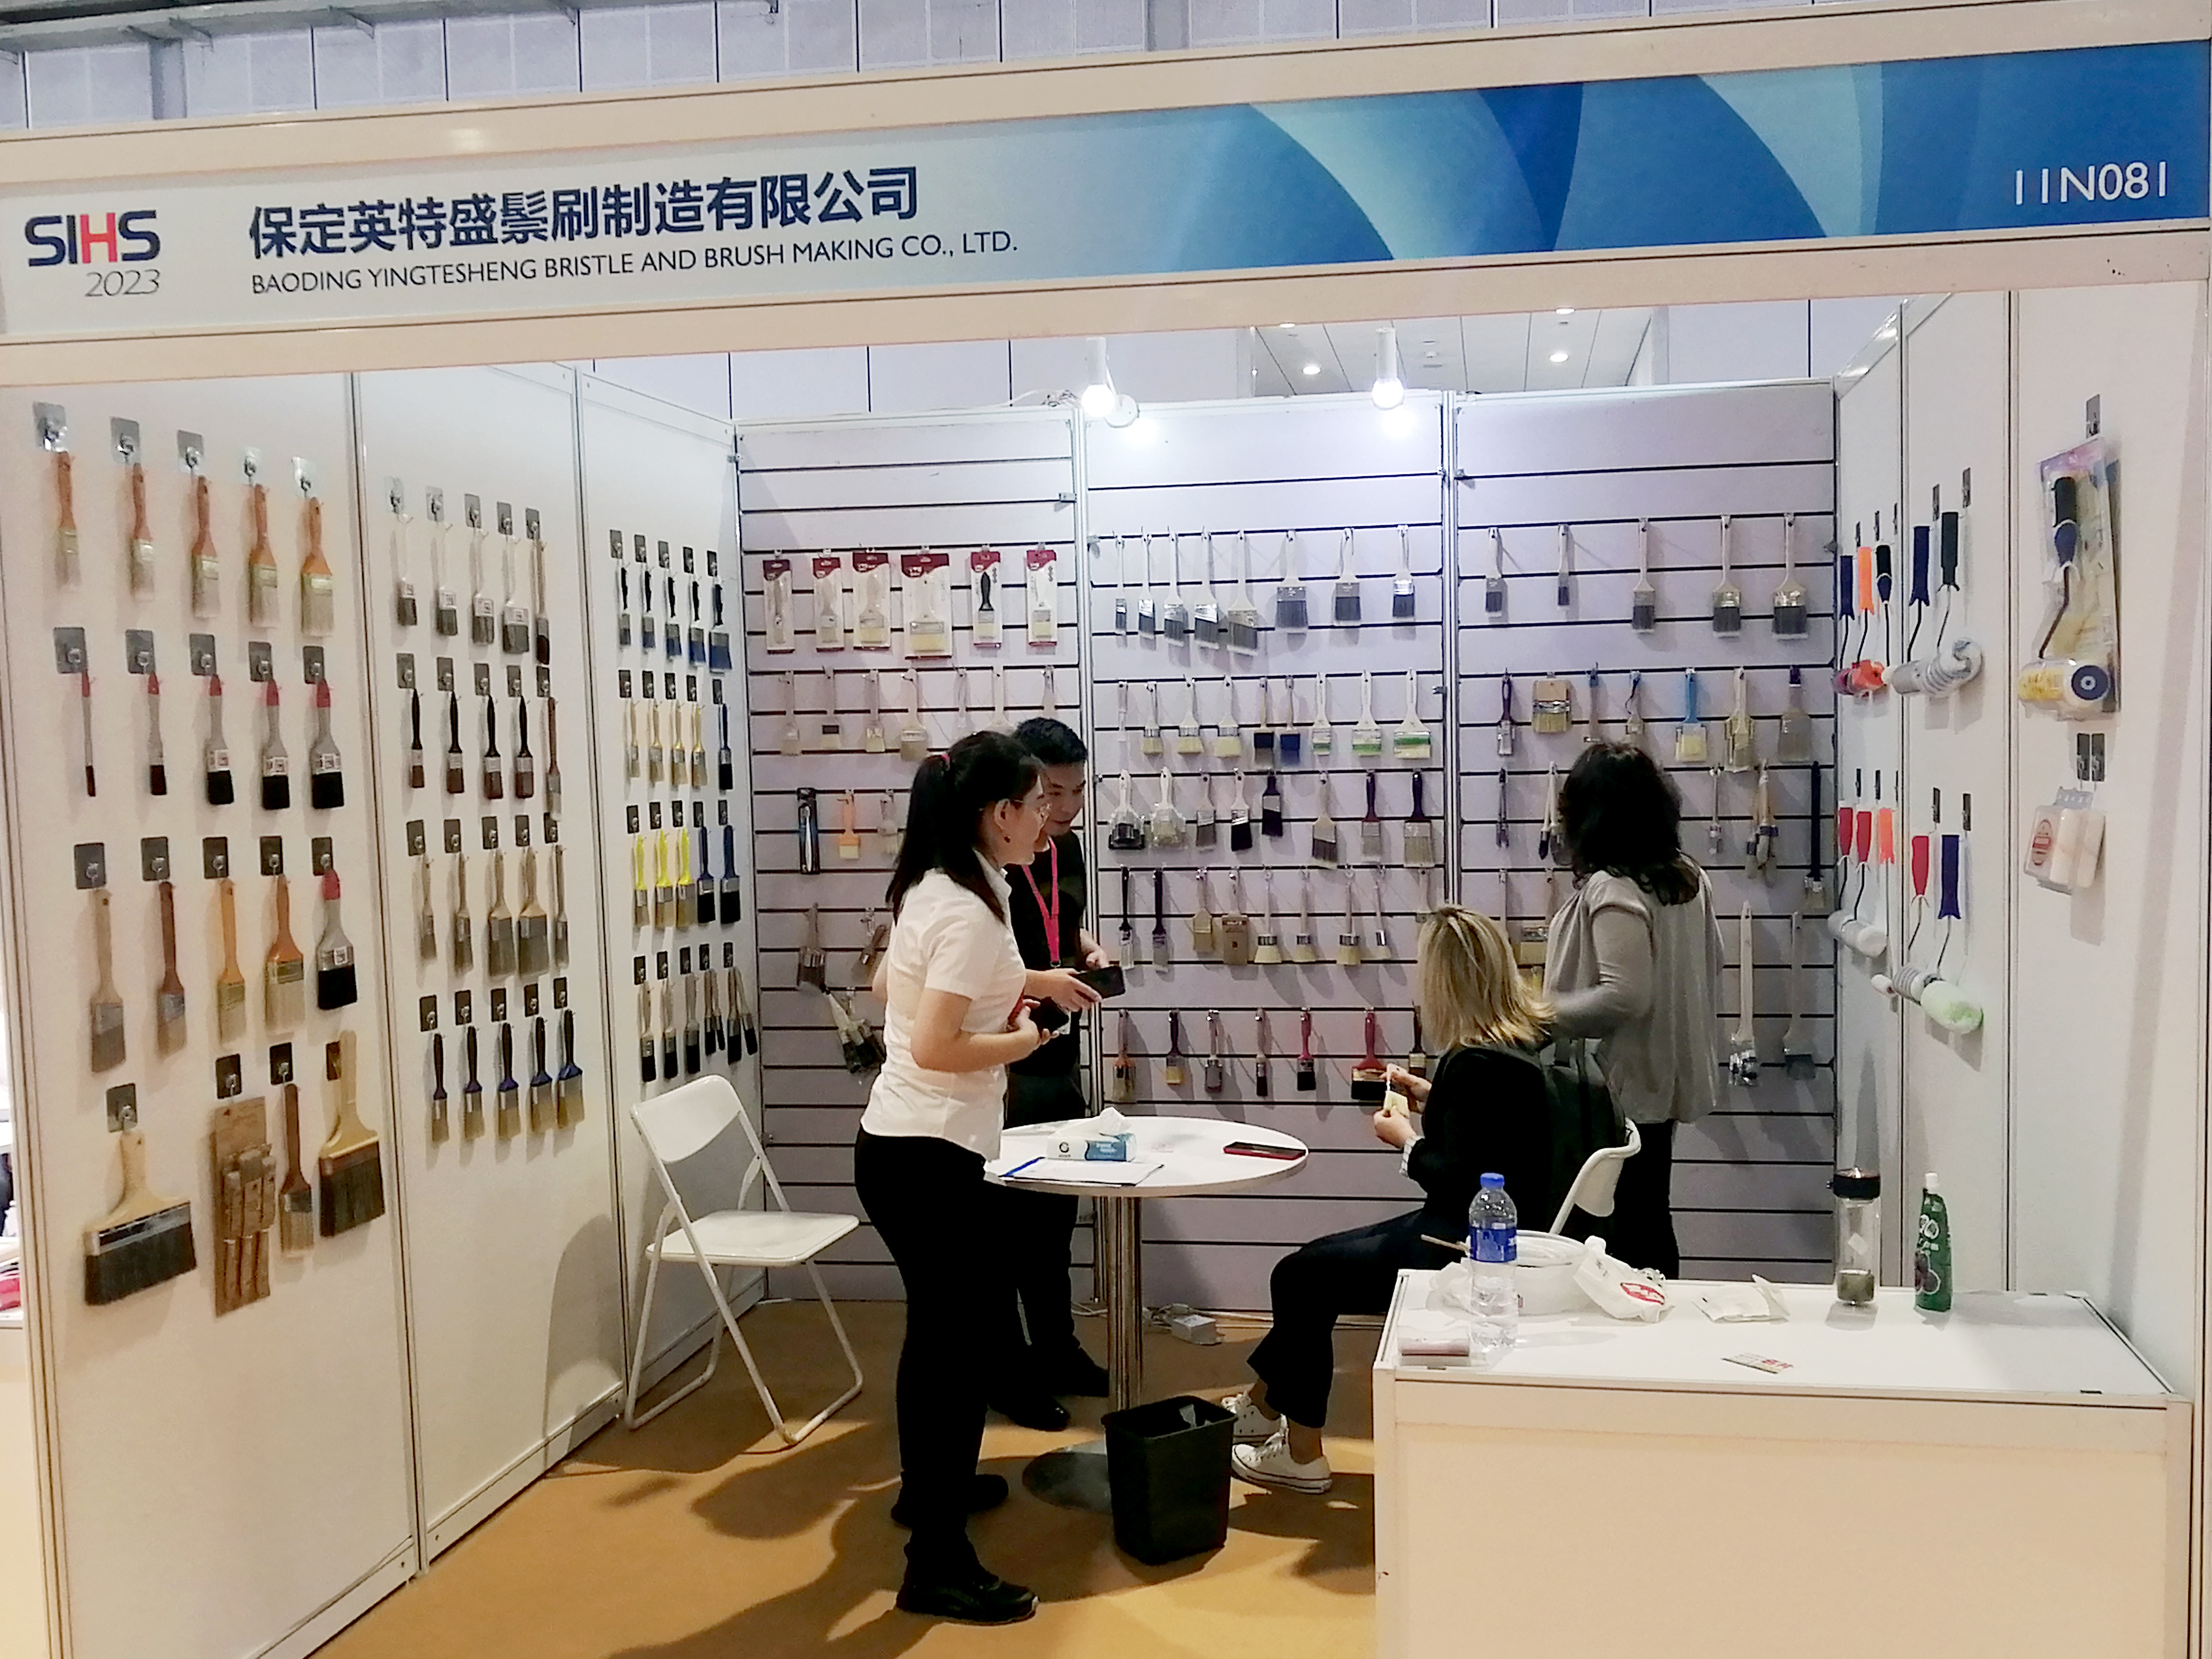 Shanghai International Hardware Show 2023